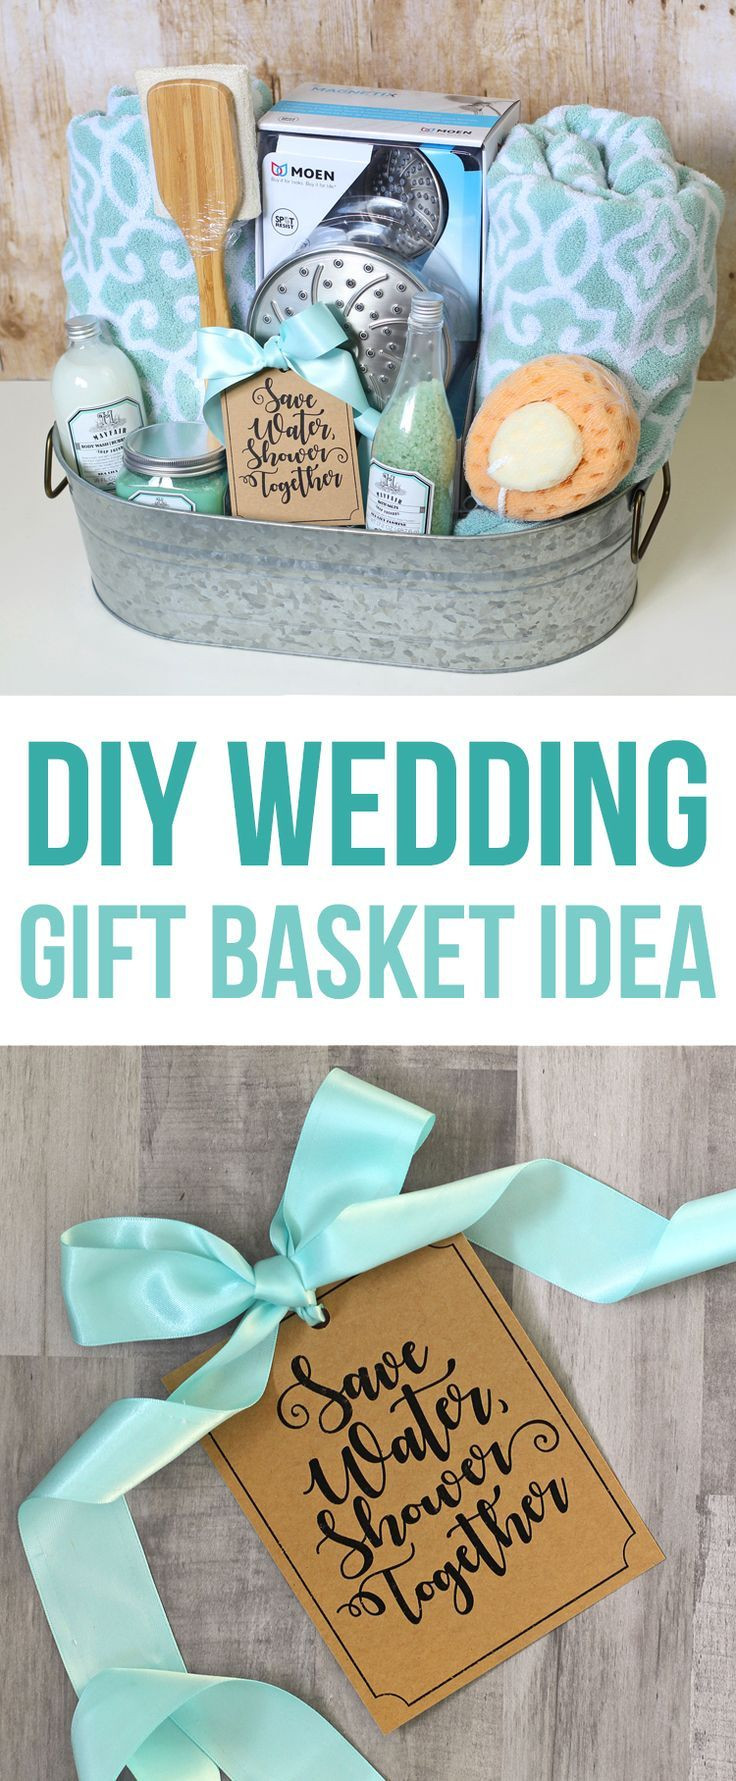 DIY Wedding Gift Baskets
 This DIY wedding t basket idea has a shower theme and